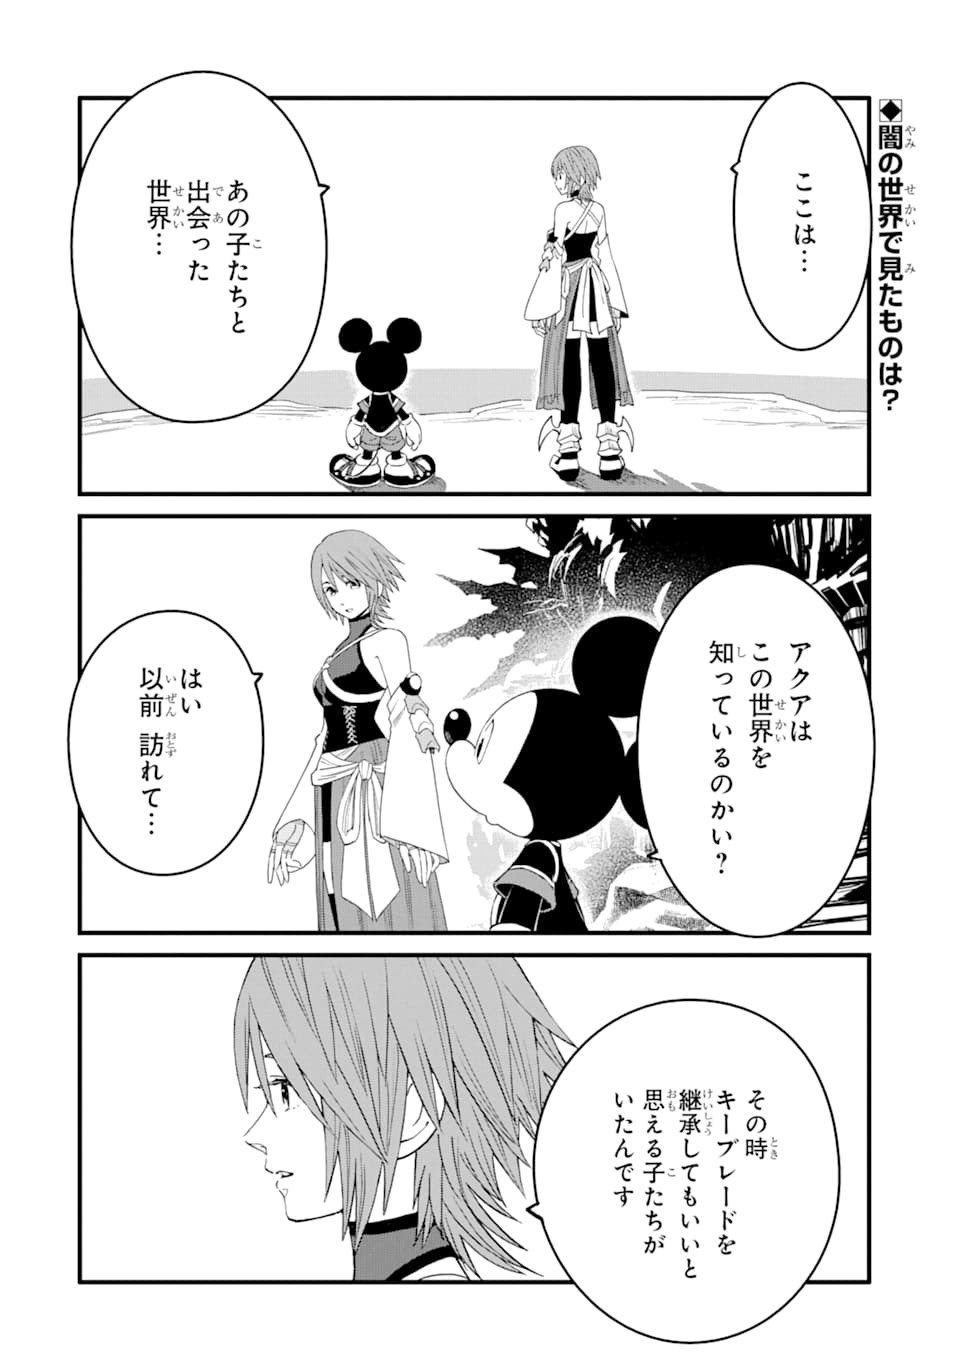 Kingdom Hearts III - Chapter 14 - Page 2